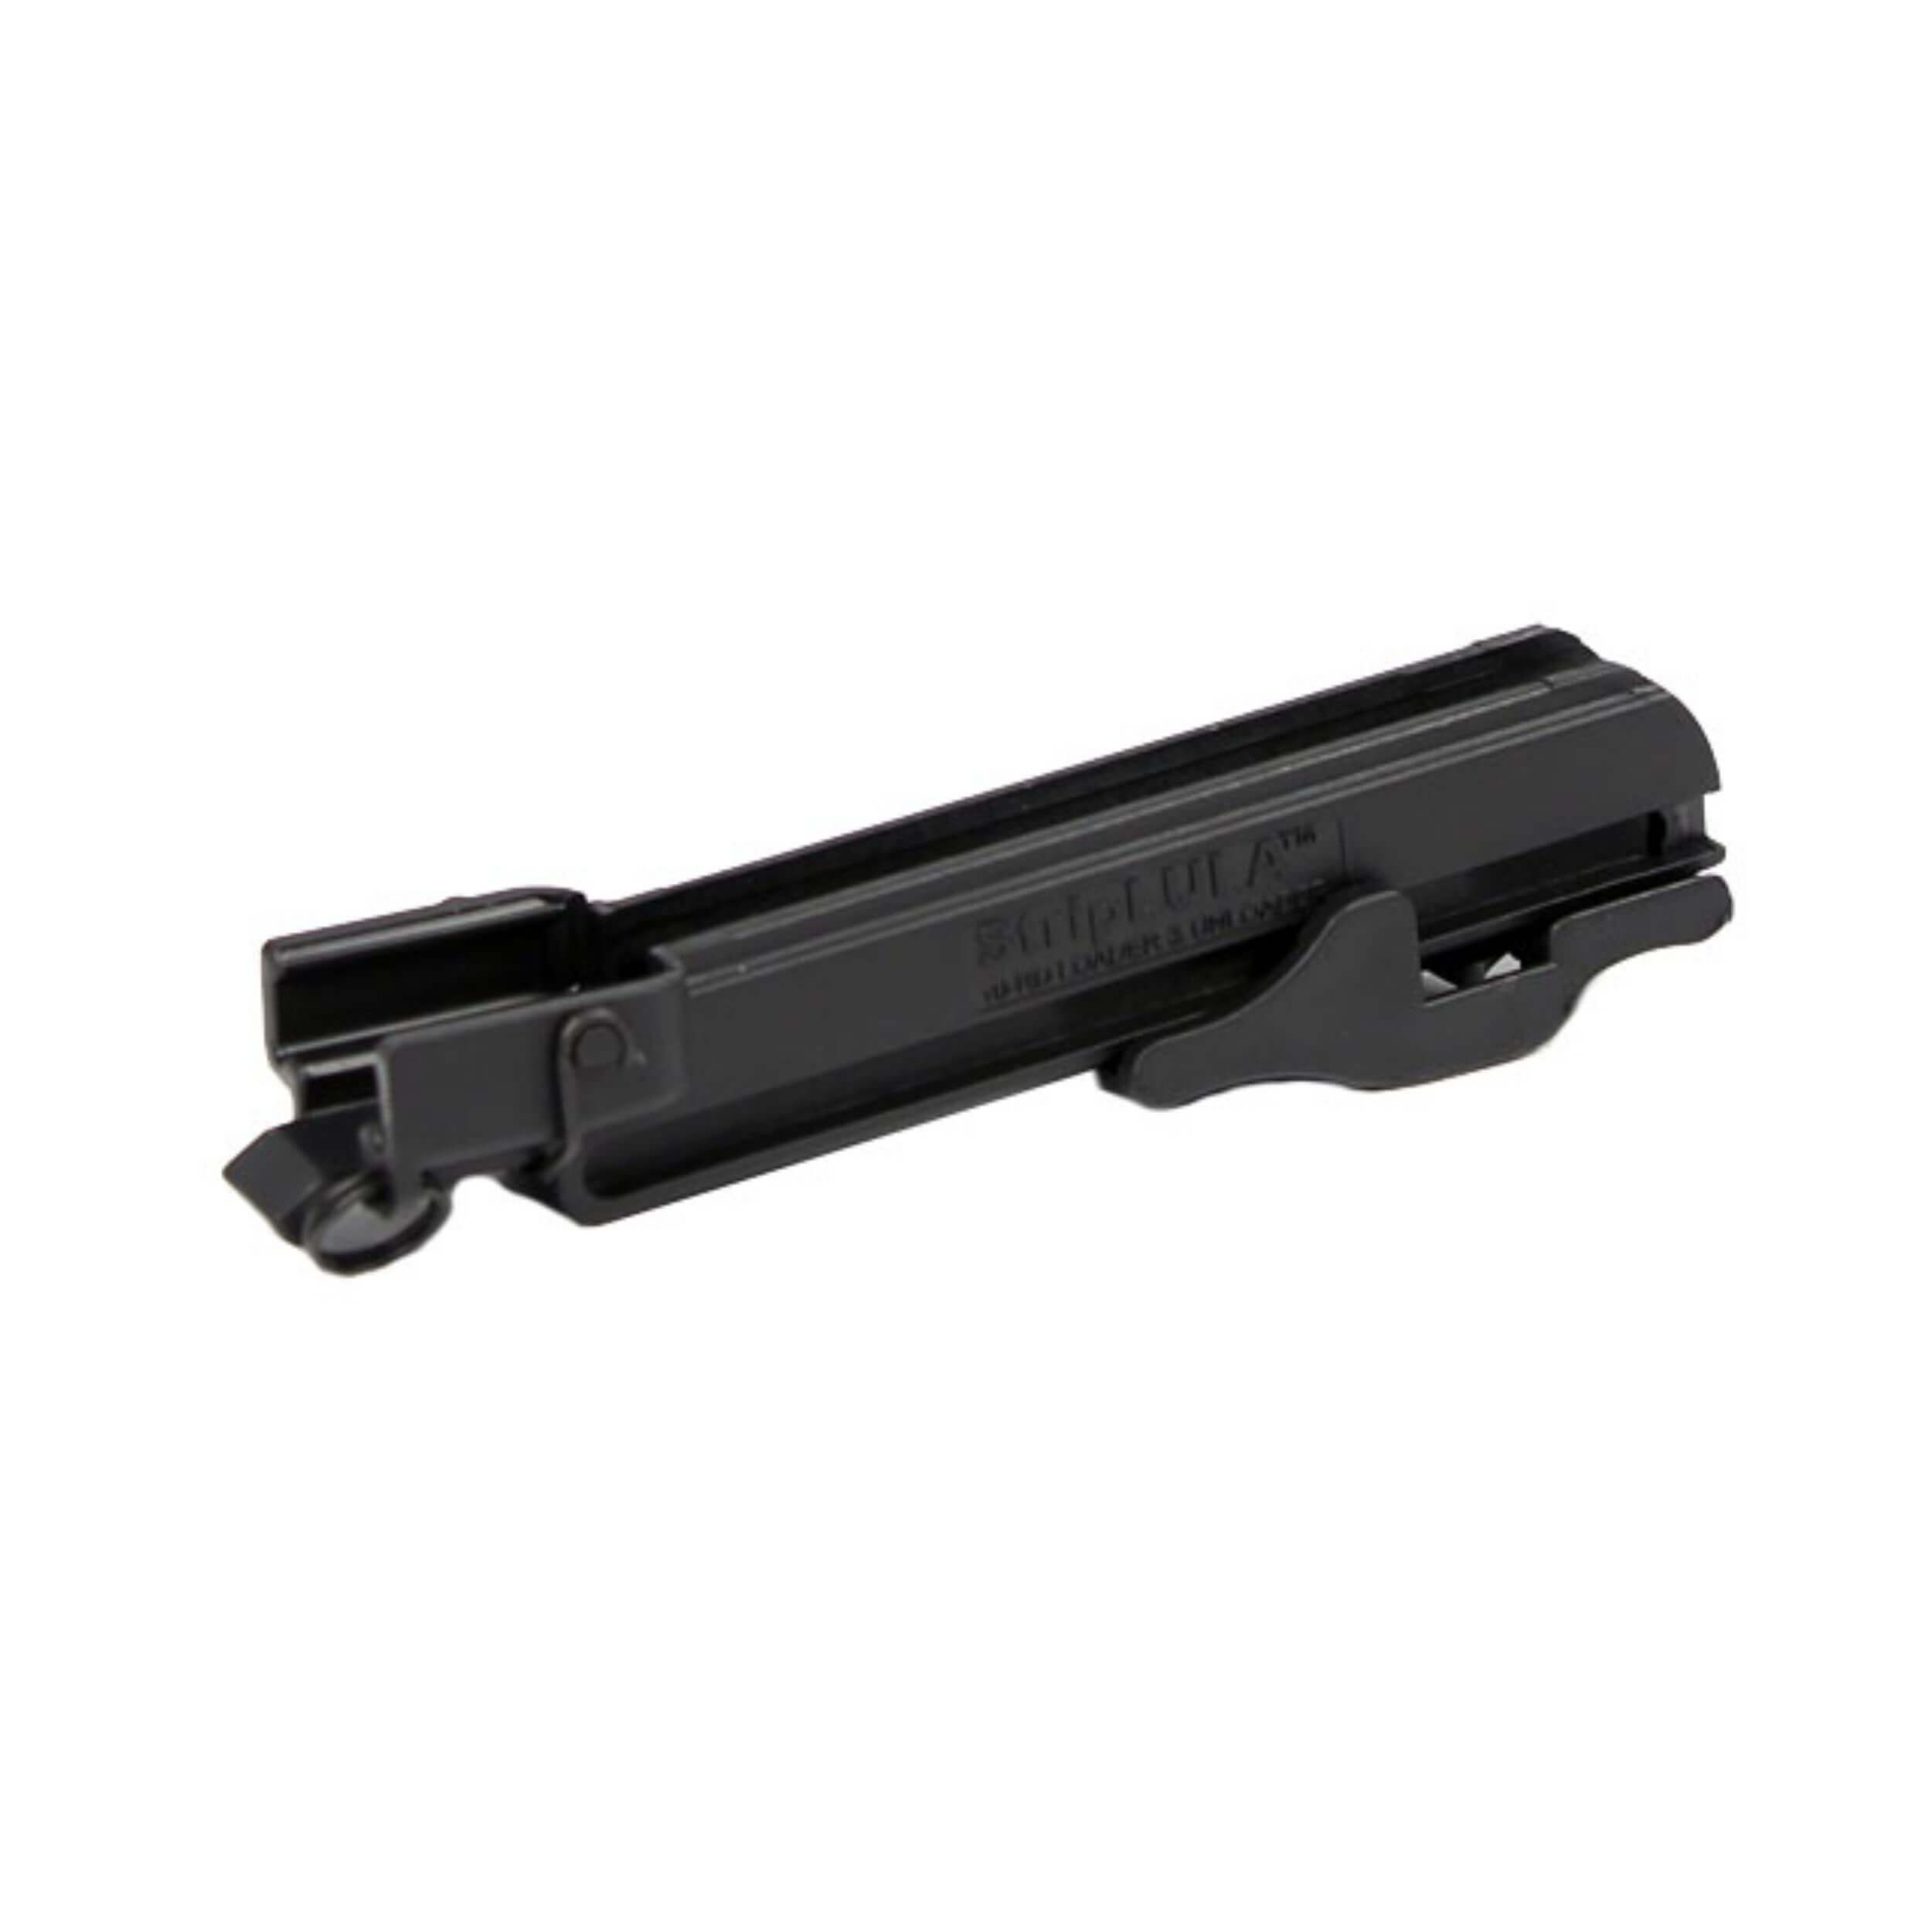 maglula® AR15 / HK416 5.56 StripLULA® Gen II 10-round magazine loader – Black SL50B